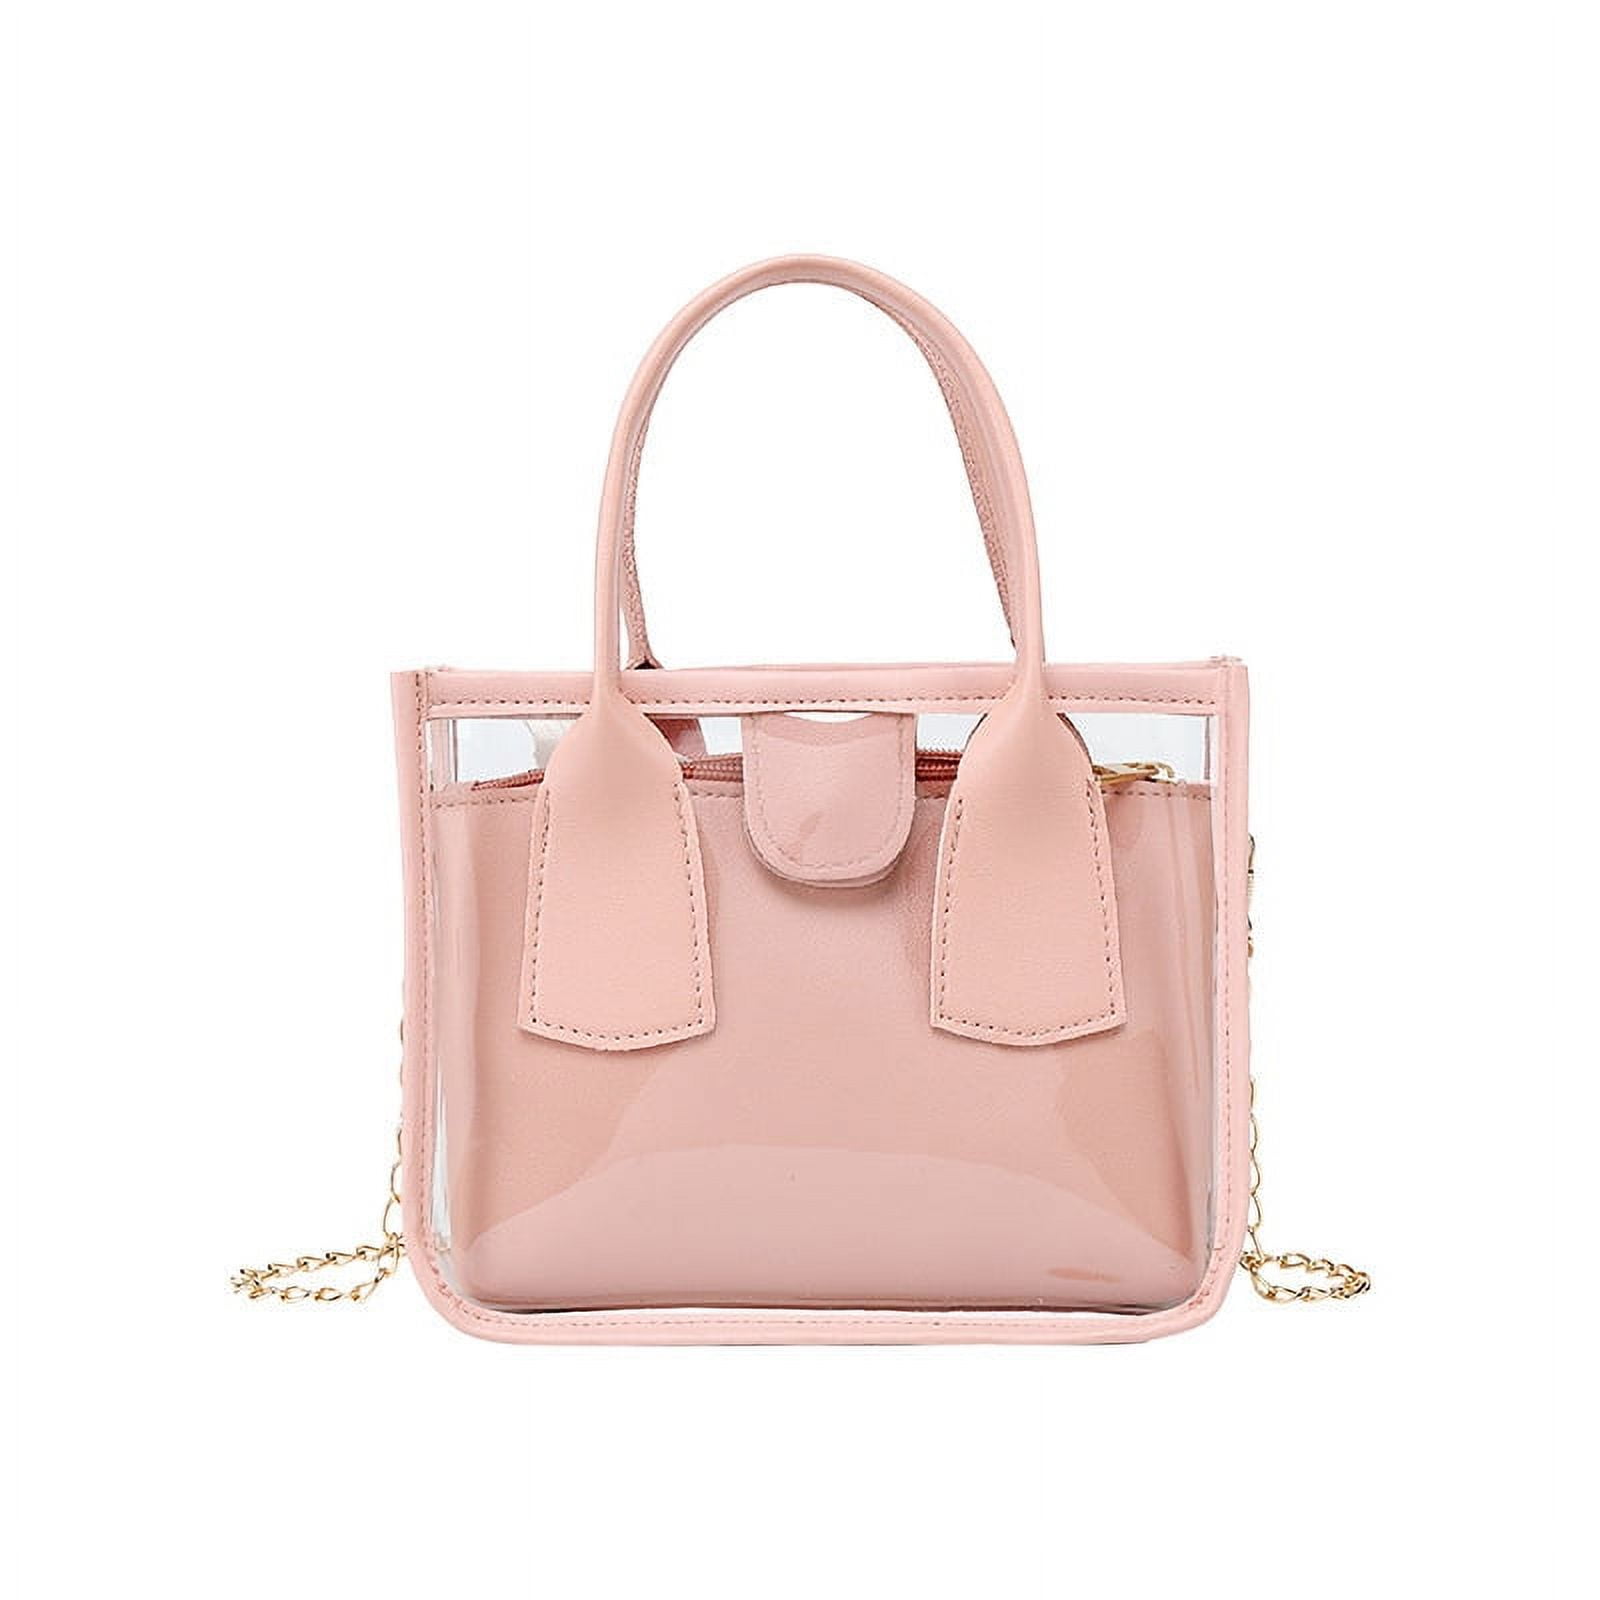 Handbags Adjustable Ladies Pink Aimeely PU Leather Handbag, Gender: Women,  400gm at Rs 800/piece in Ludhiana